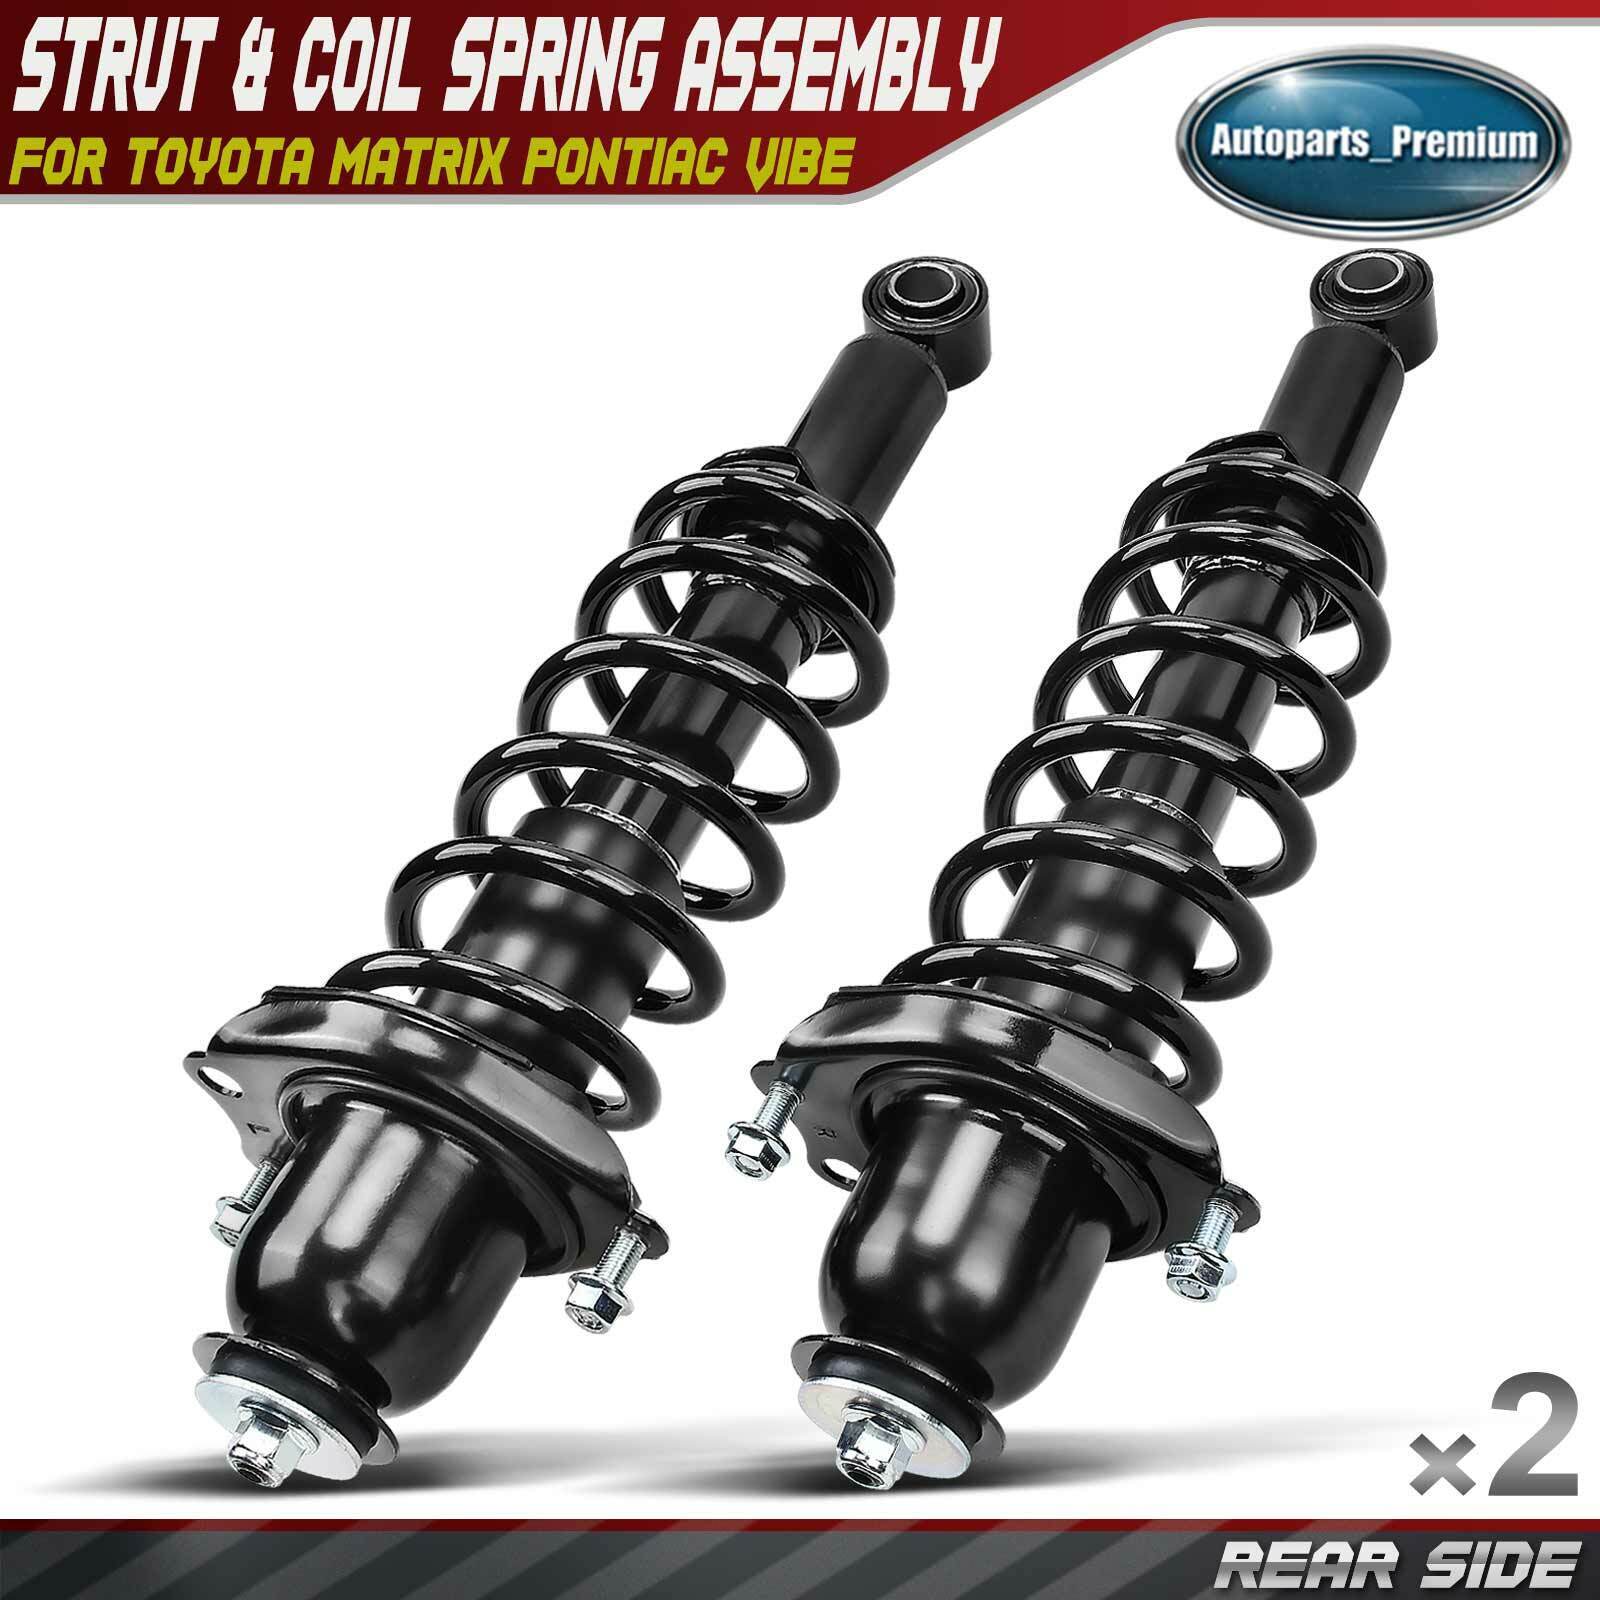 2x Rear L&R Complete Strut & Coil Spring Assembly for Toyota Matrix Pontiac Vibe